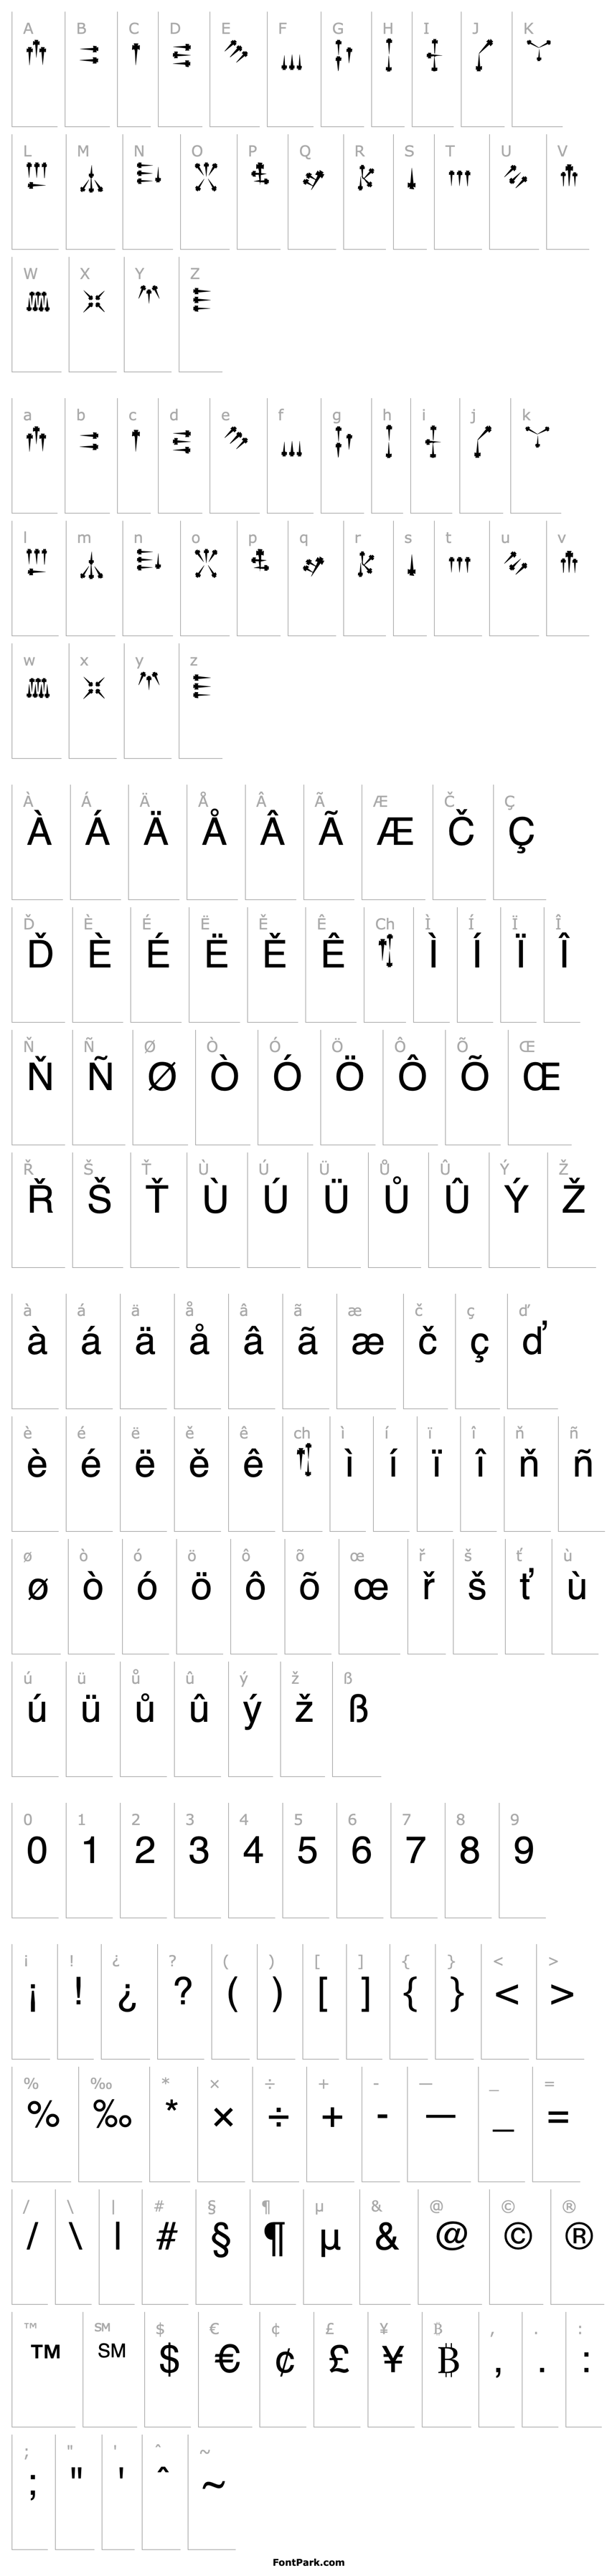 Overview Alphabet of Daggers